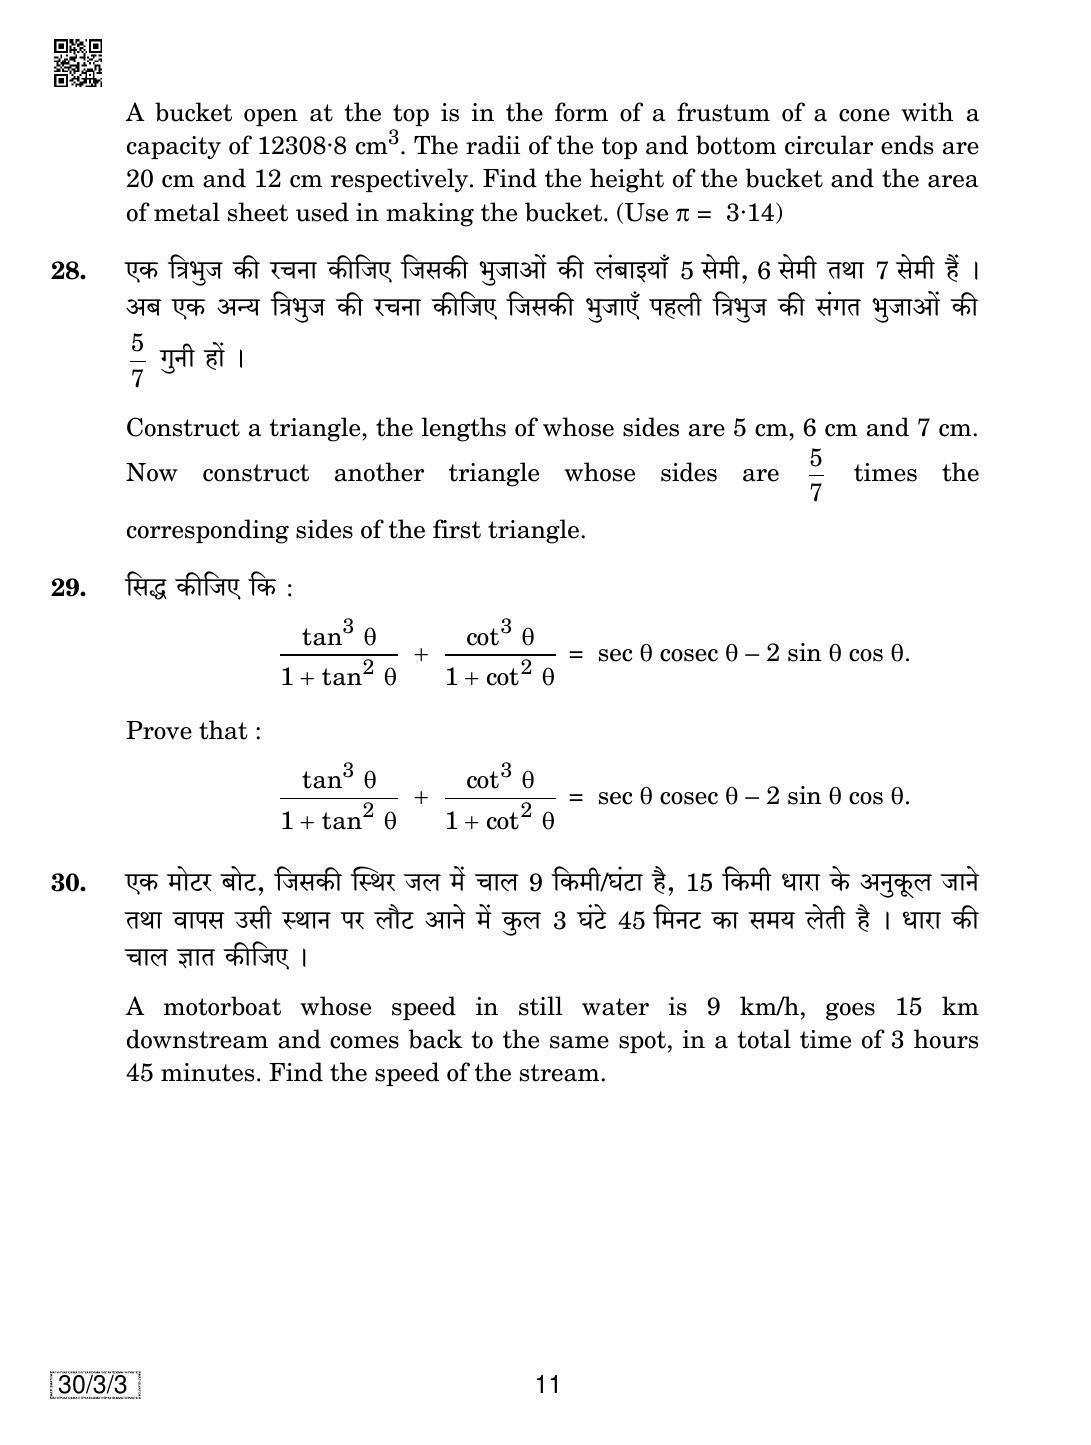 CBSE Class 10 Maths (30/3/3 - SET 3) 2019 Question Paper - Page 11